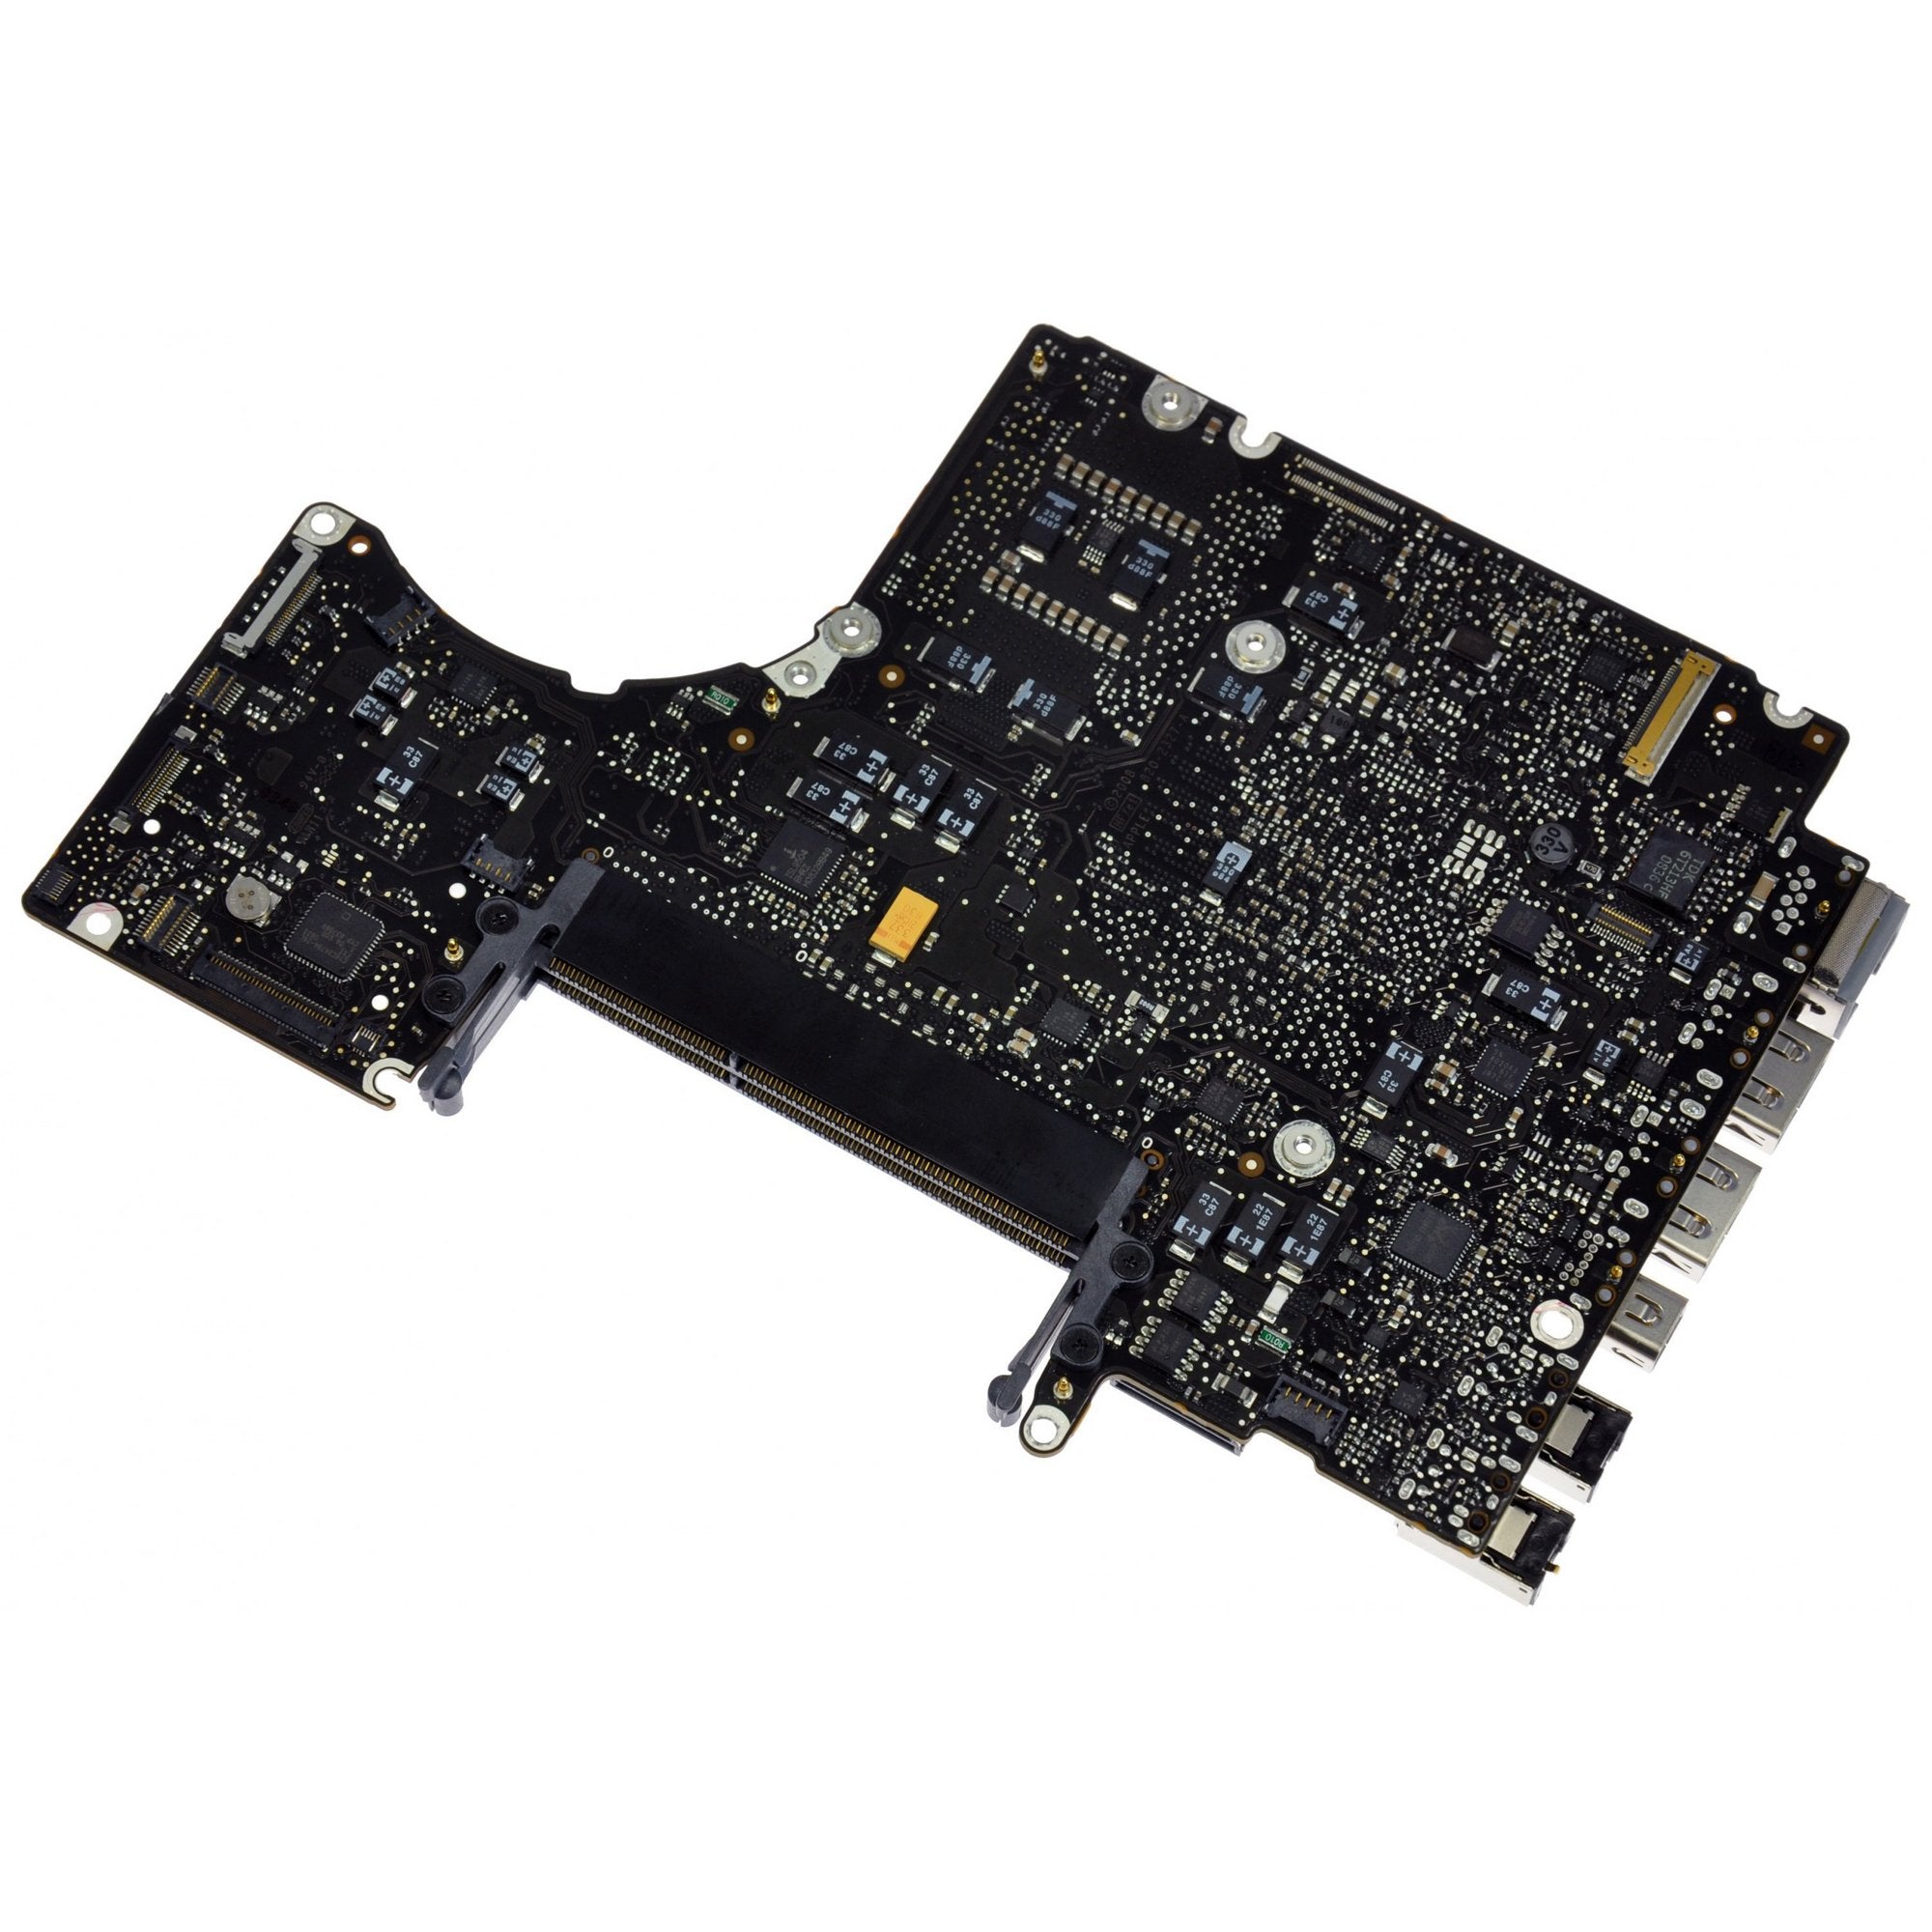 MacBook Unibody (A1278) 2.4 GHz Logic Board Used